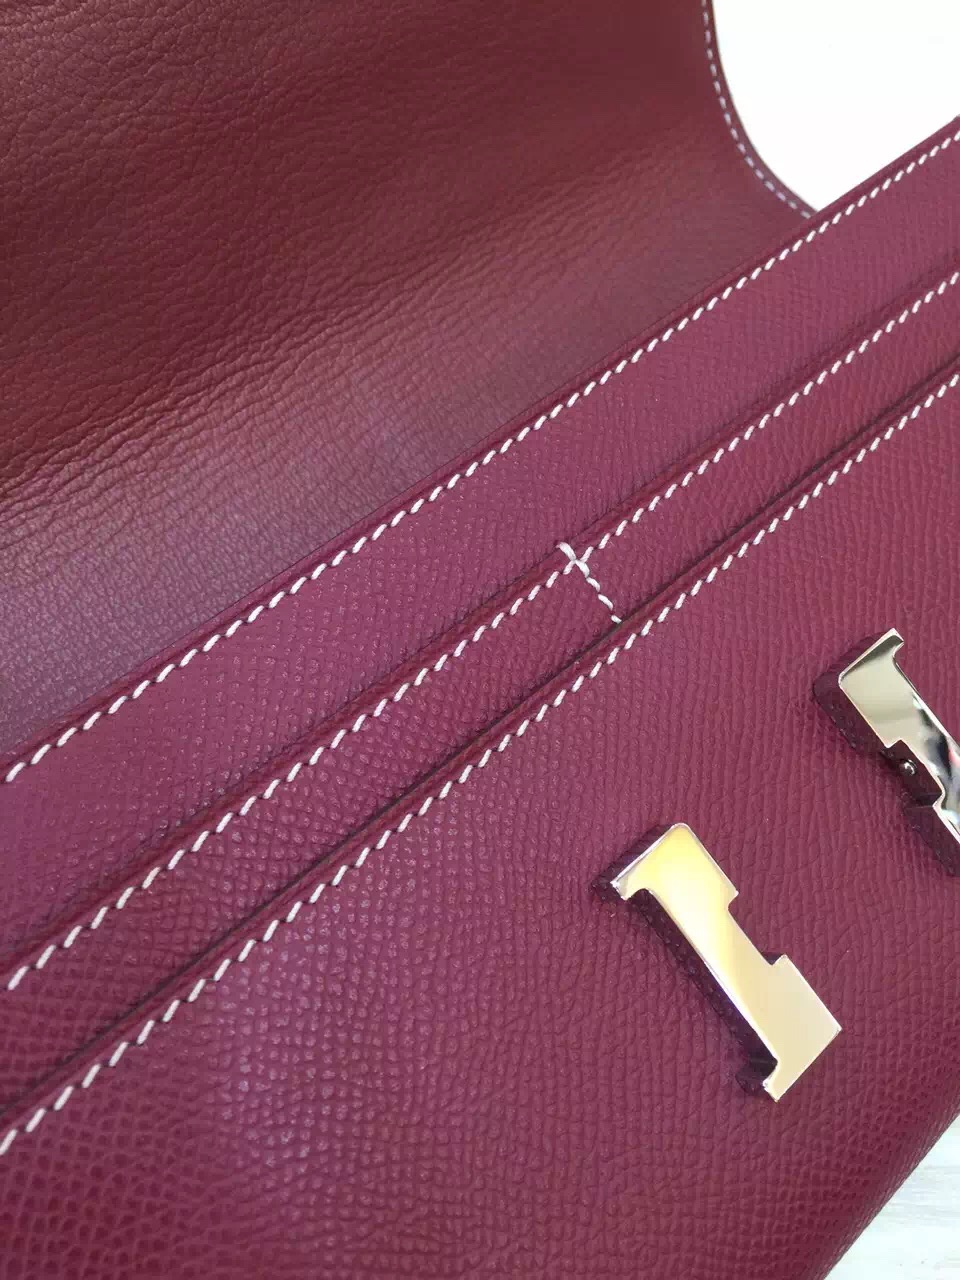 Hand Stitching Hermes Constance Wallet Burgundy Epsom Leather Clutch Handbag